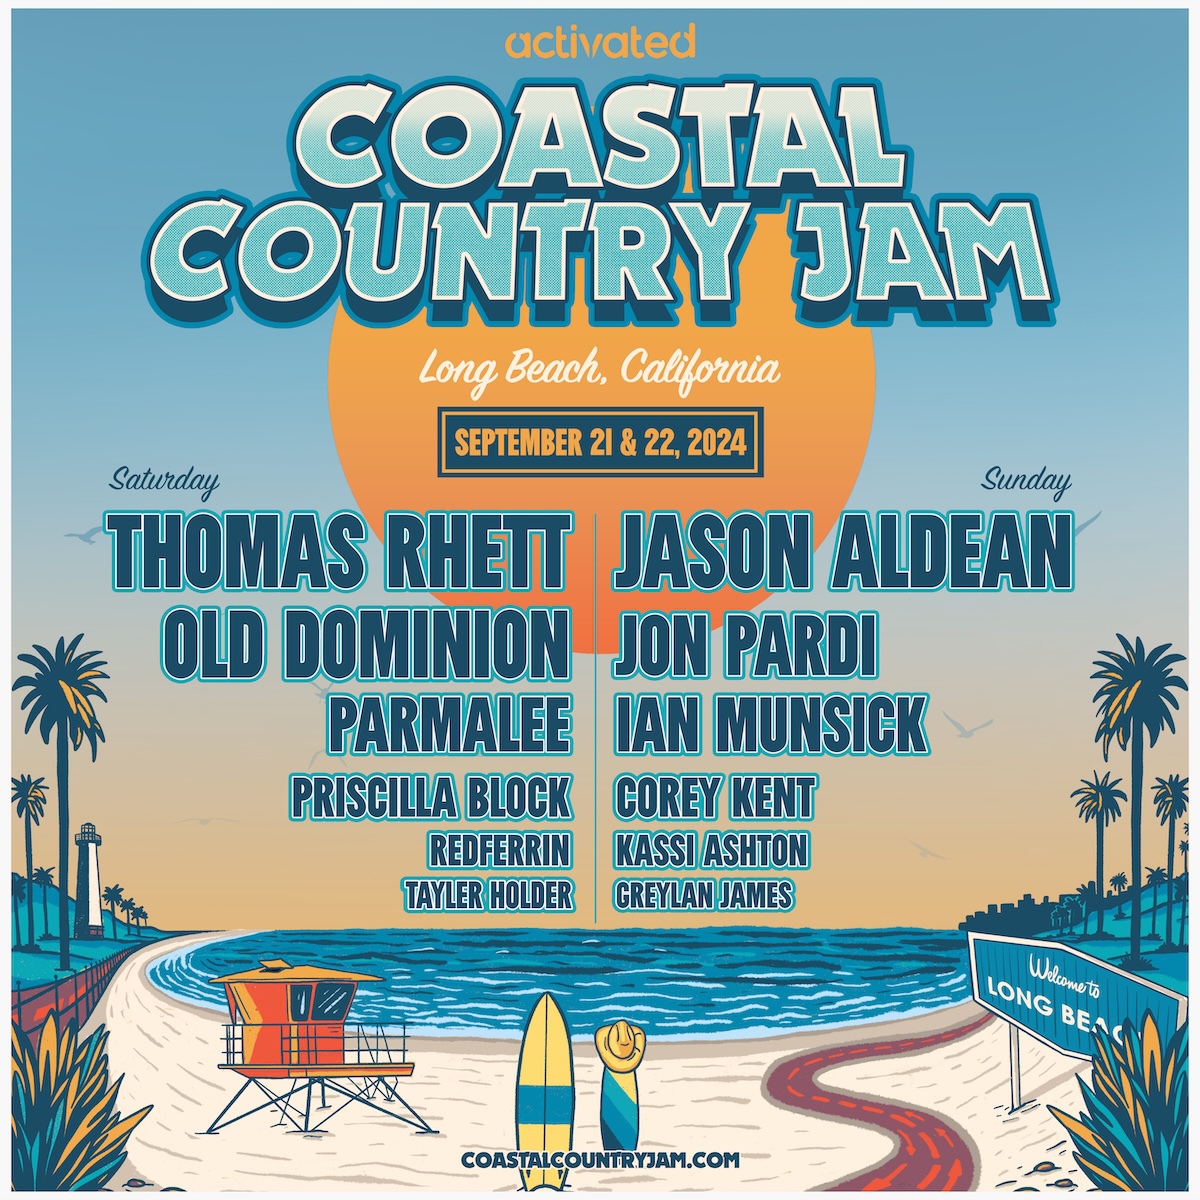 Long Beach, we’ll see u guys September 22 at @CoastCountryJam! Passes go on sale Friday, March 22 at 10am PST.🤘🏼coastalcountryjam.com